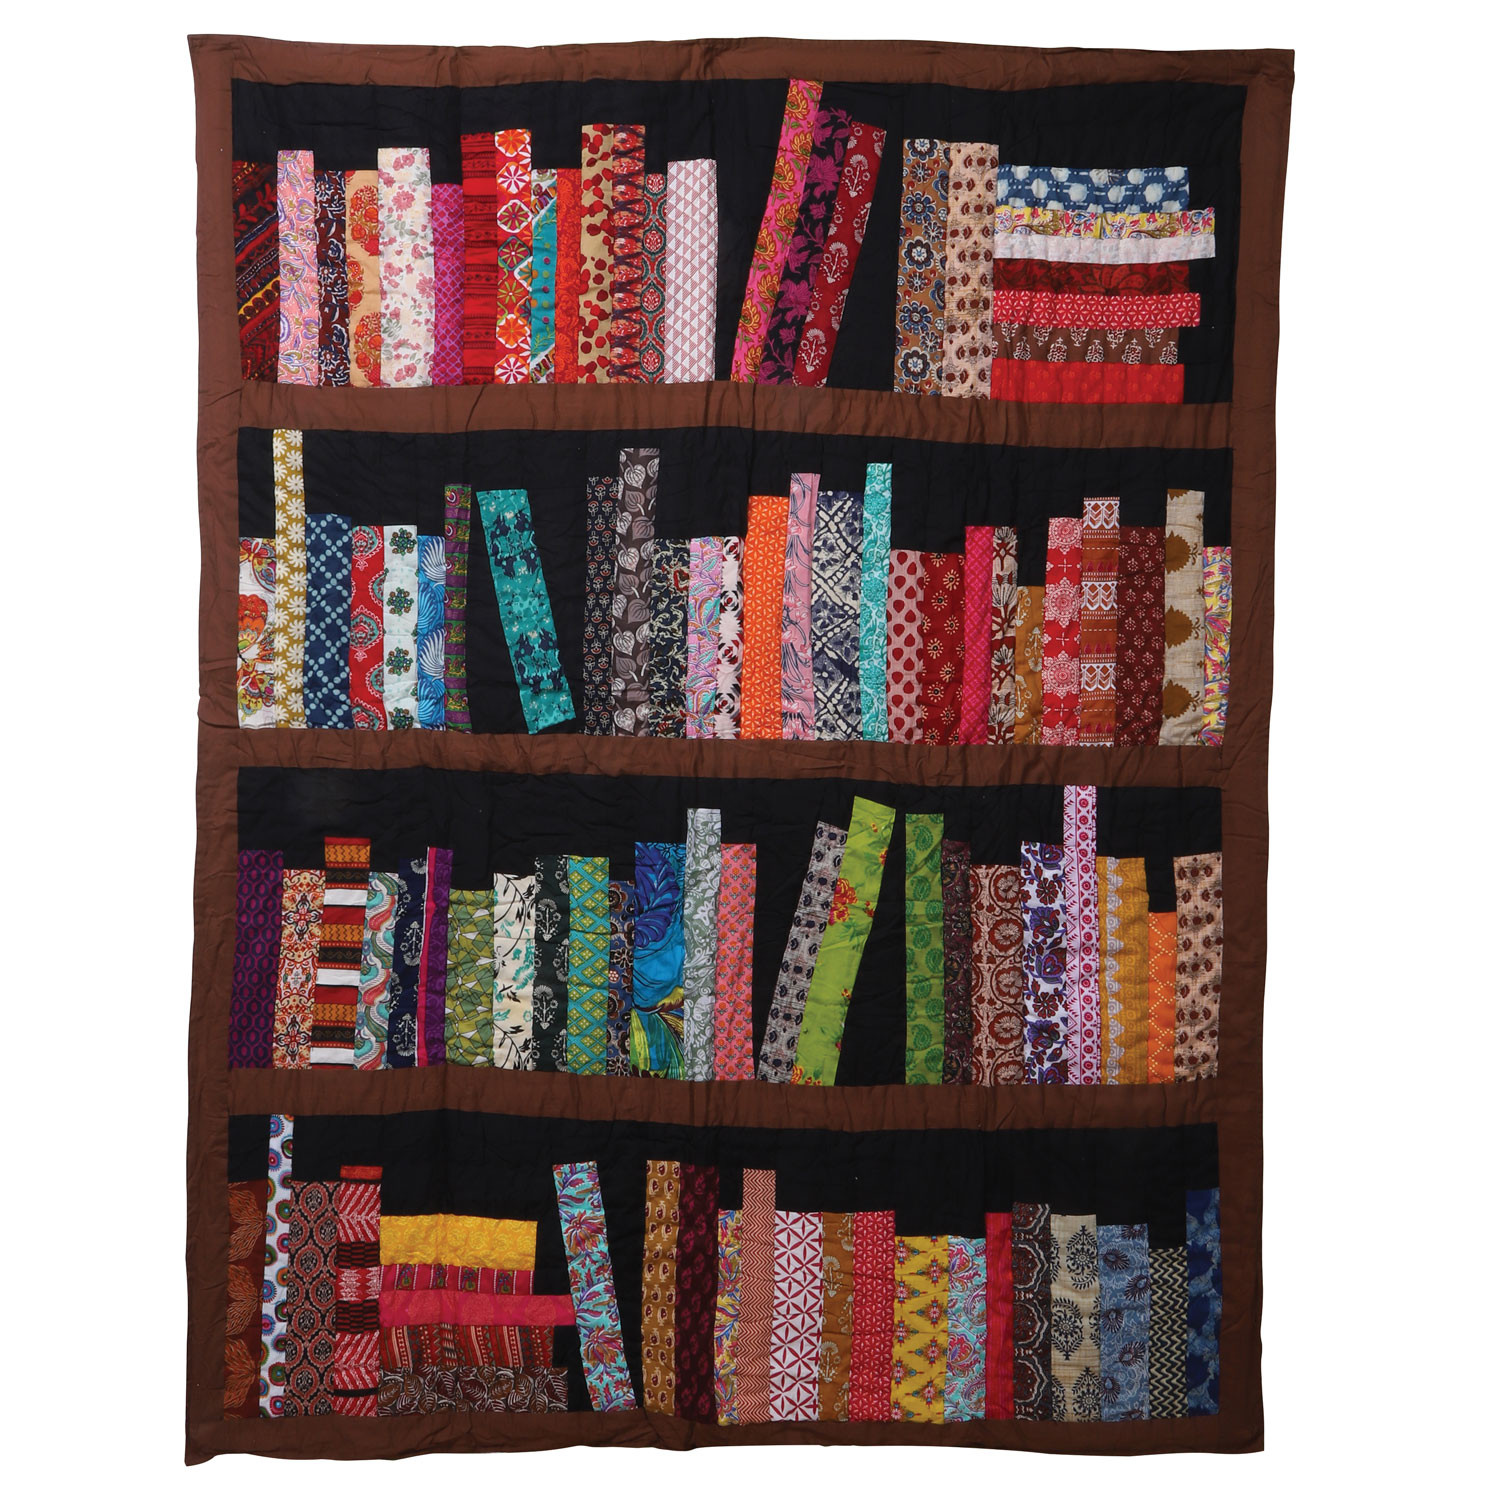 ART & ARTIFACT Bookshelf Throw Blanket - Reversible Library Book Cotton Quilt